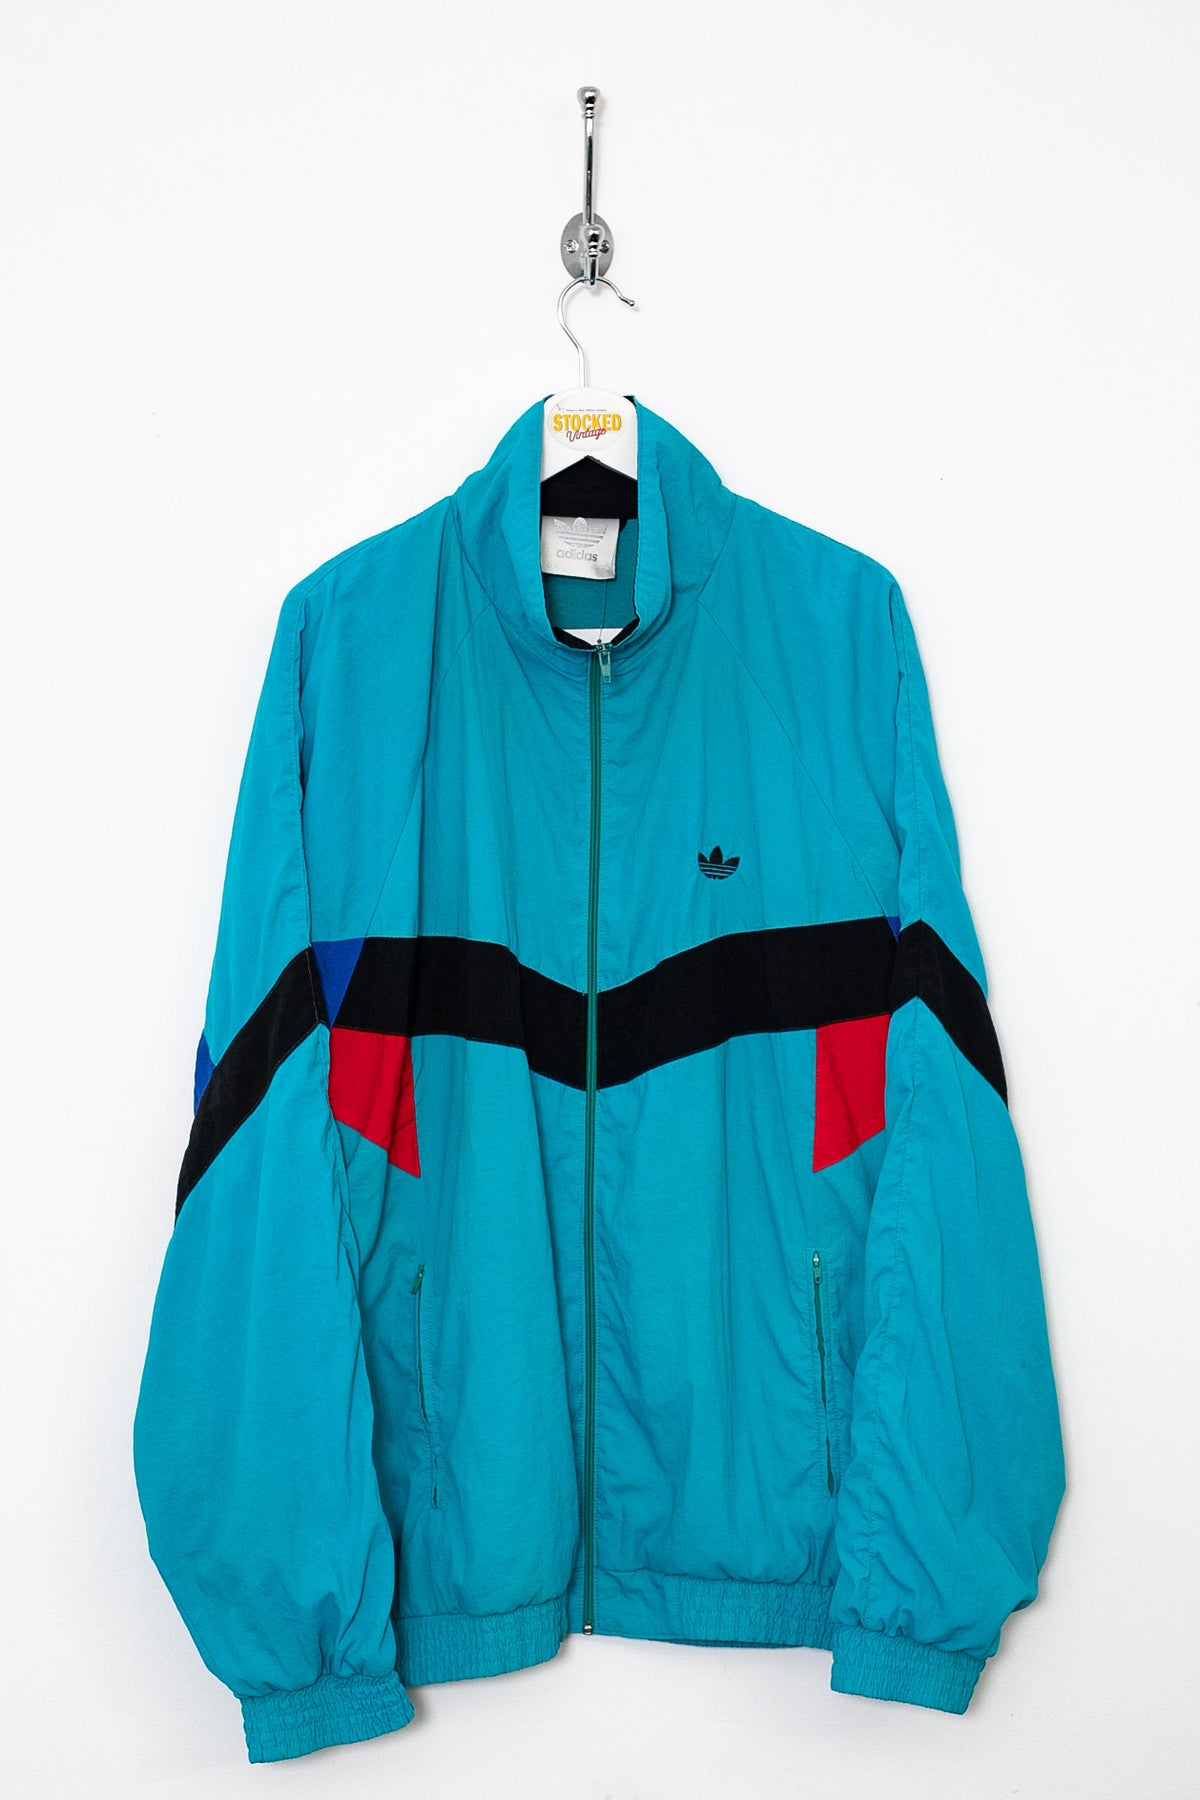 90s Adidas Jacket (L)